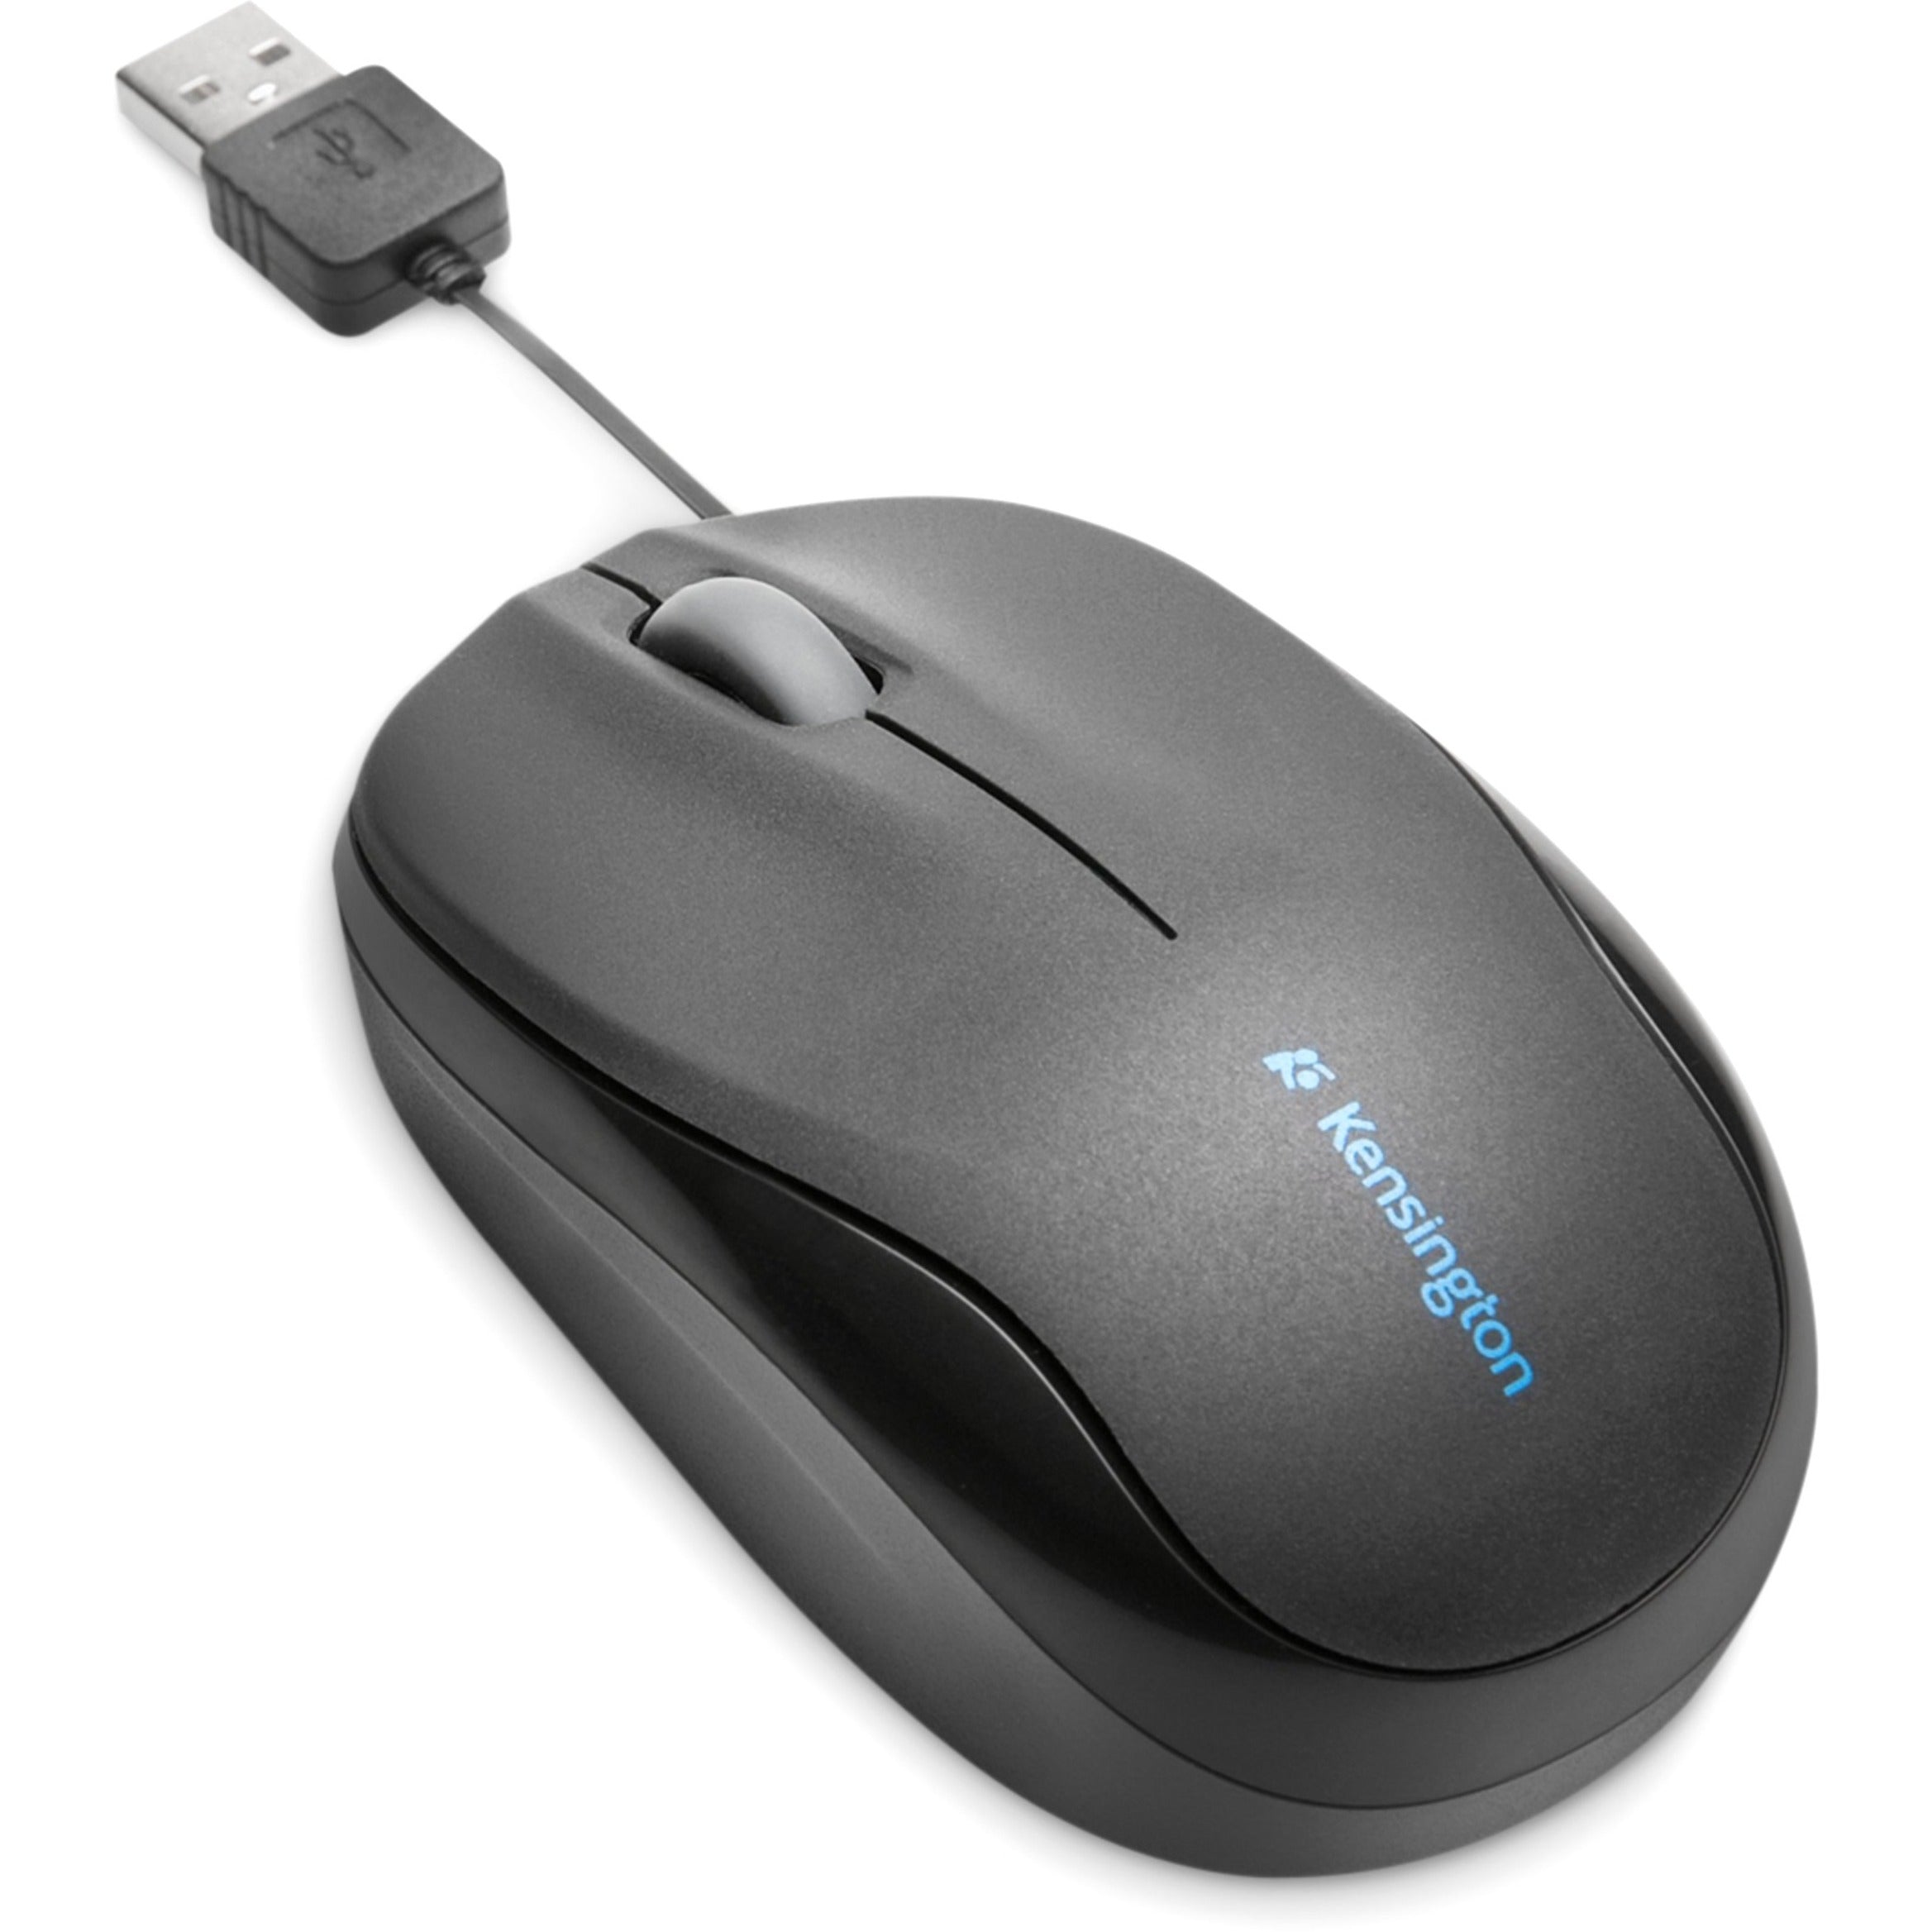 Kensington K72339USA Pro Fit Mobile Retractable Mouse, Black - 2 Year Warranty, USB Connectivity